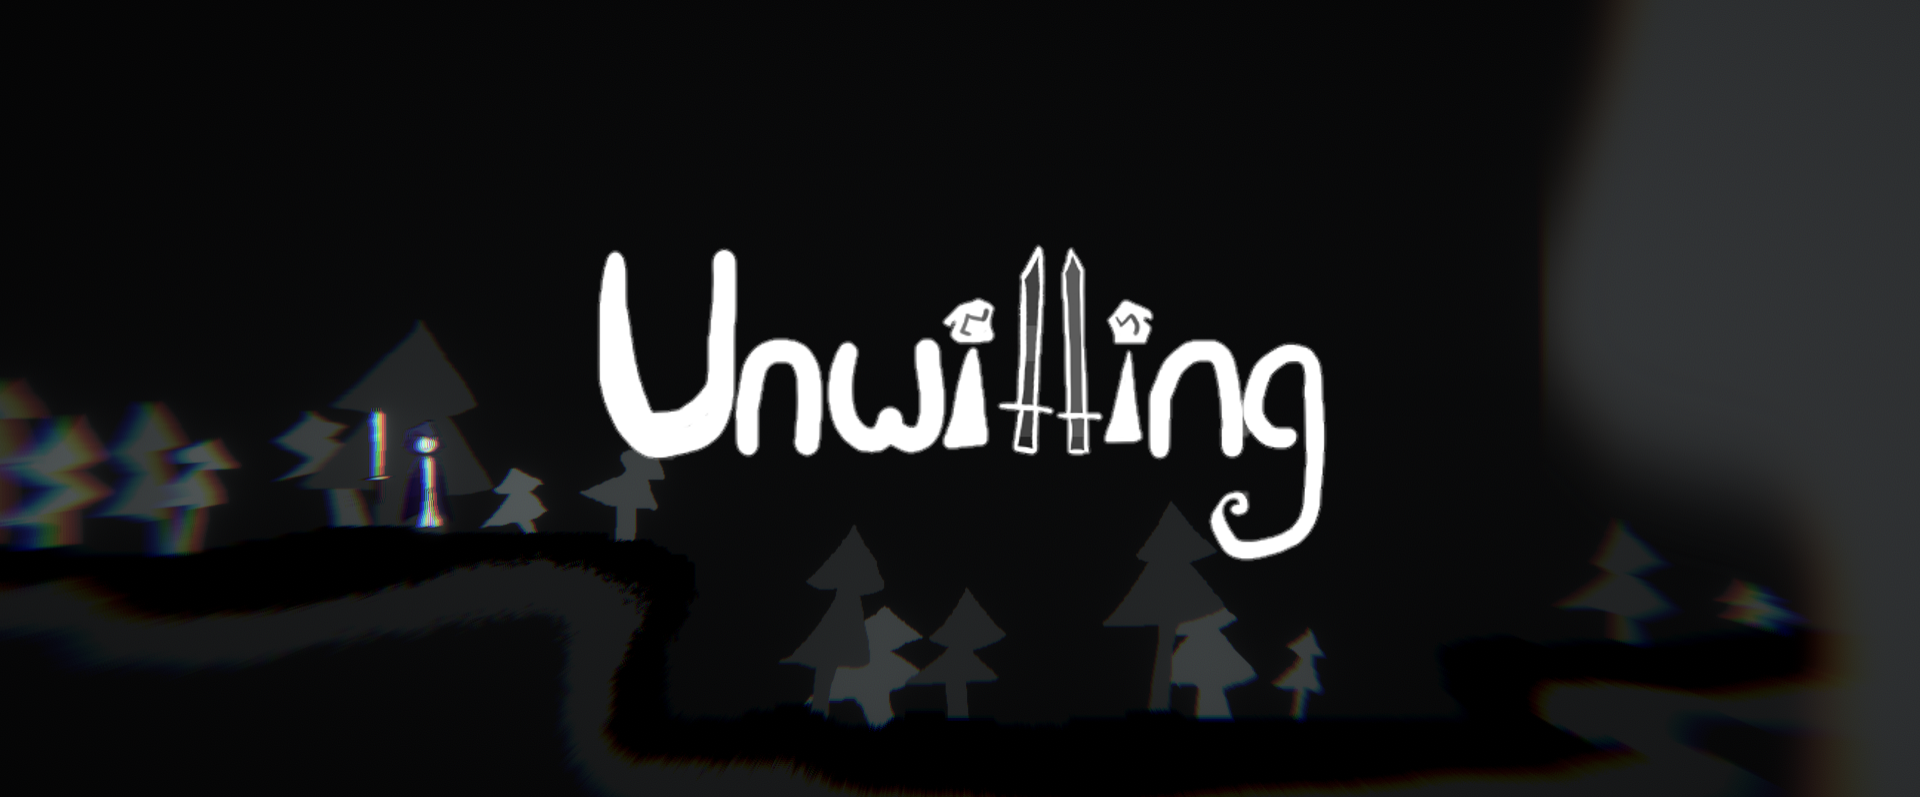 Unwilling